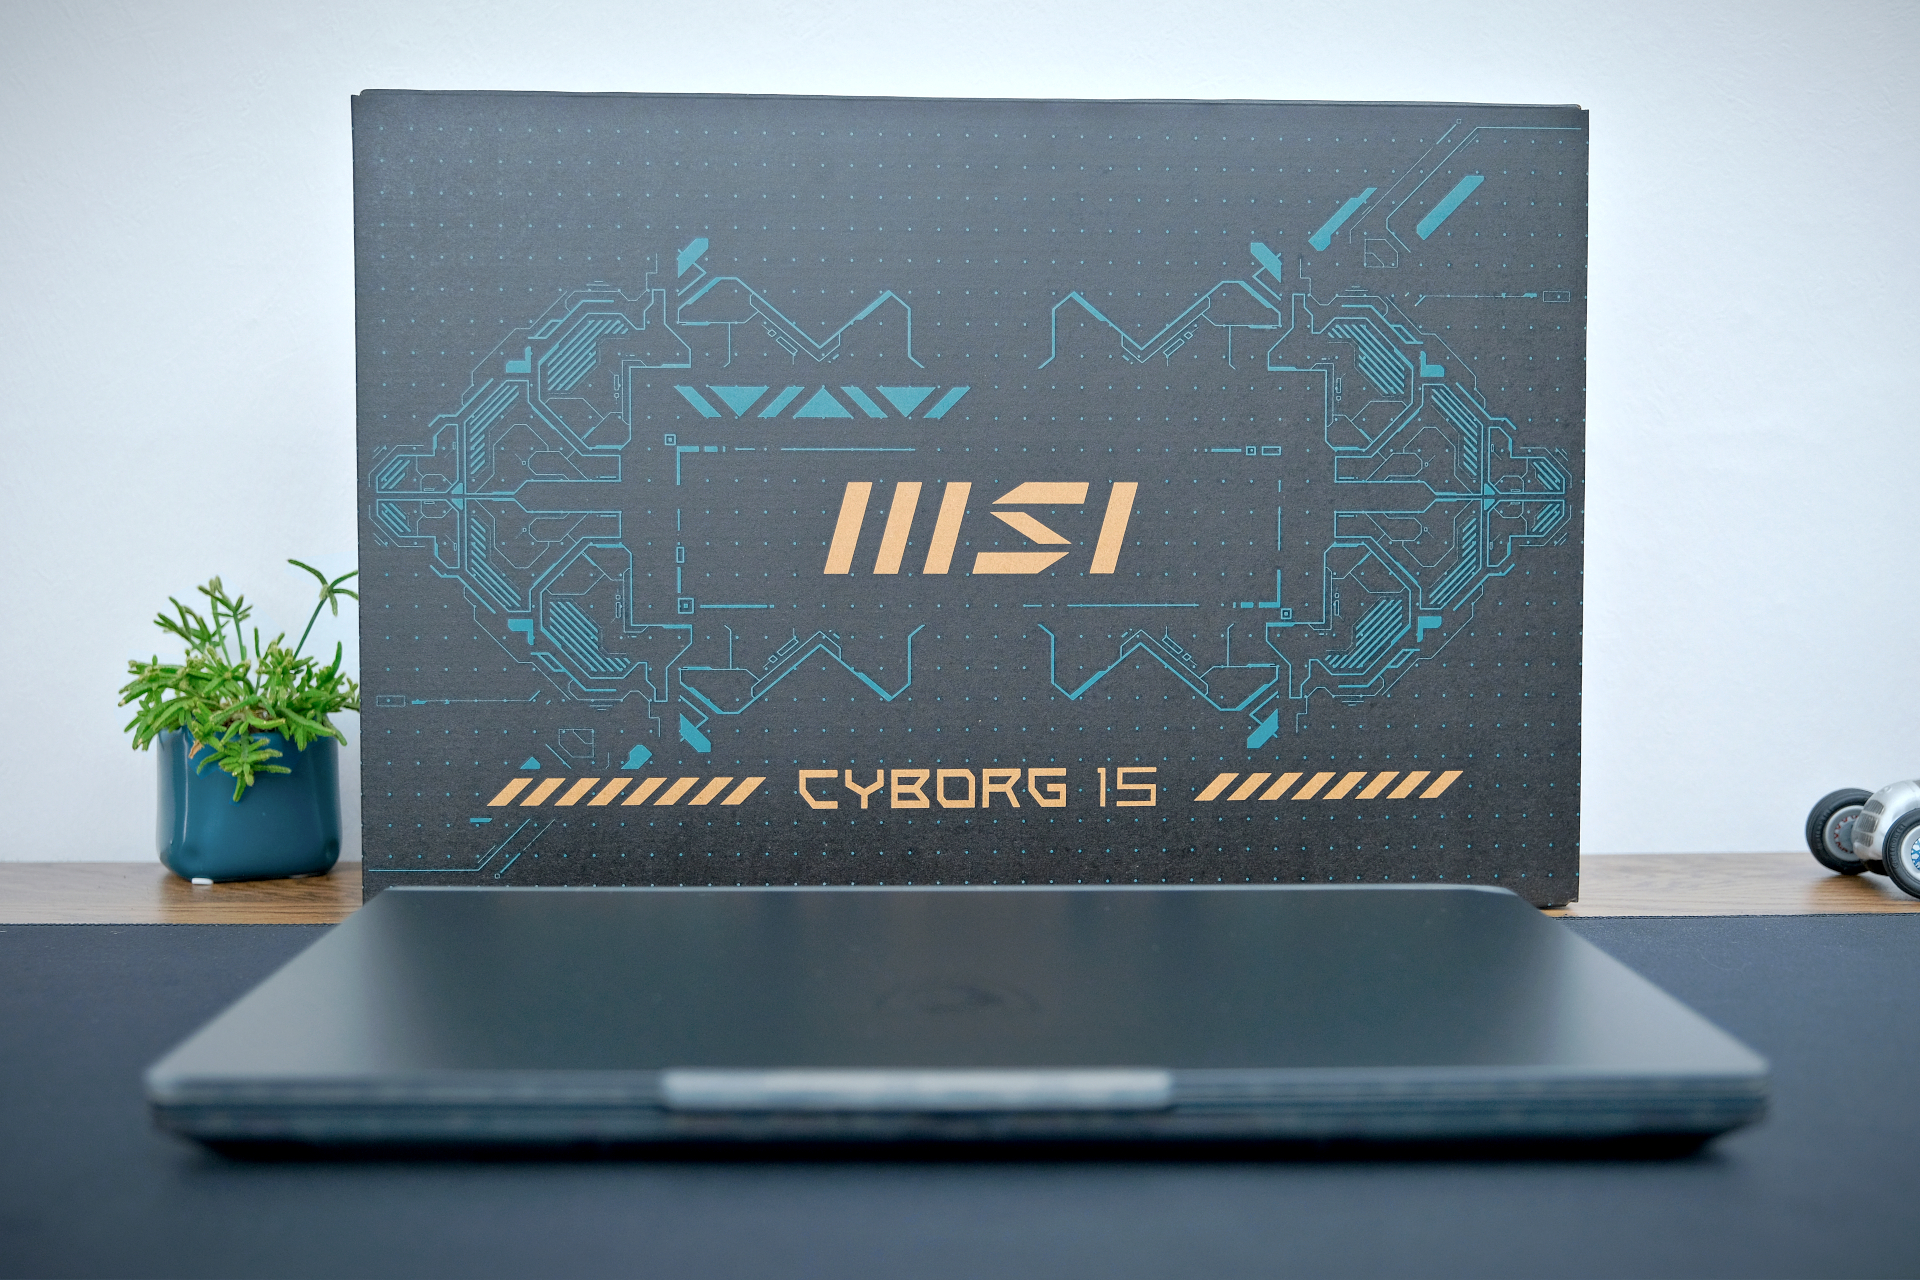 MSI Cyborg 15: kompaktes Gaming-Notrbook mit Cyberpunk-Anstrich